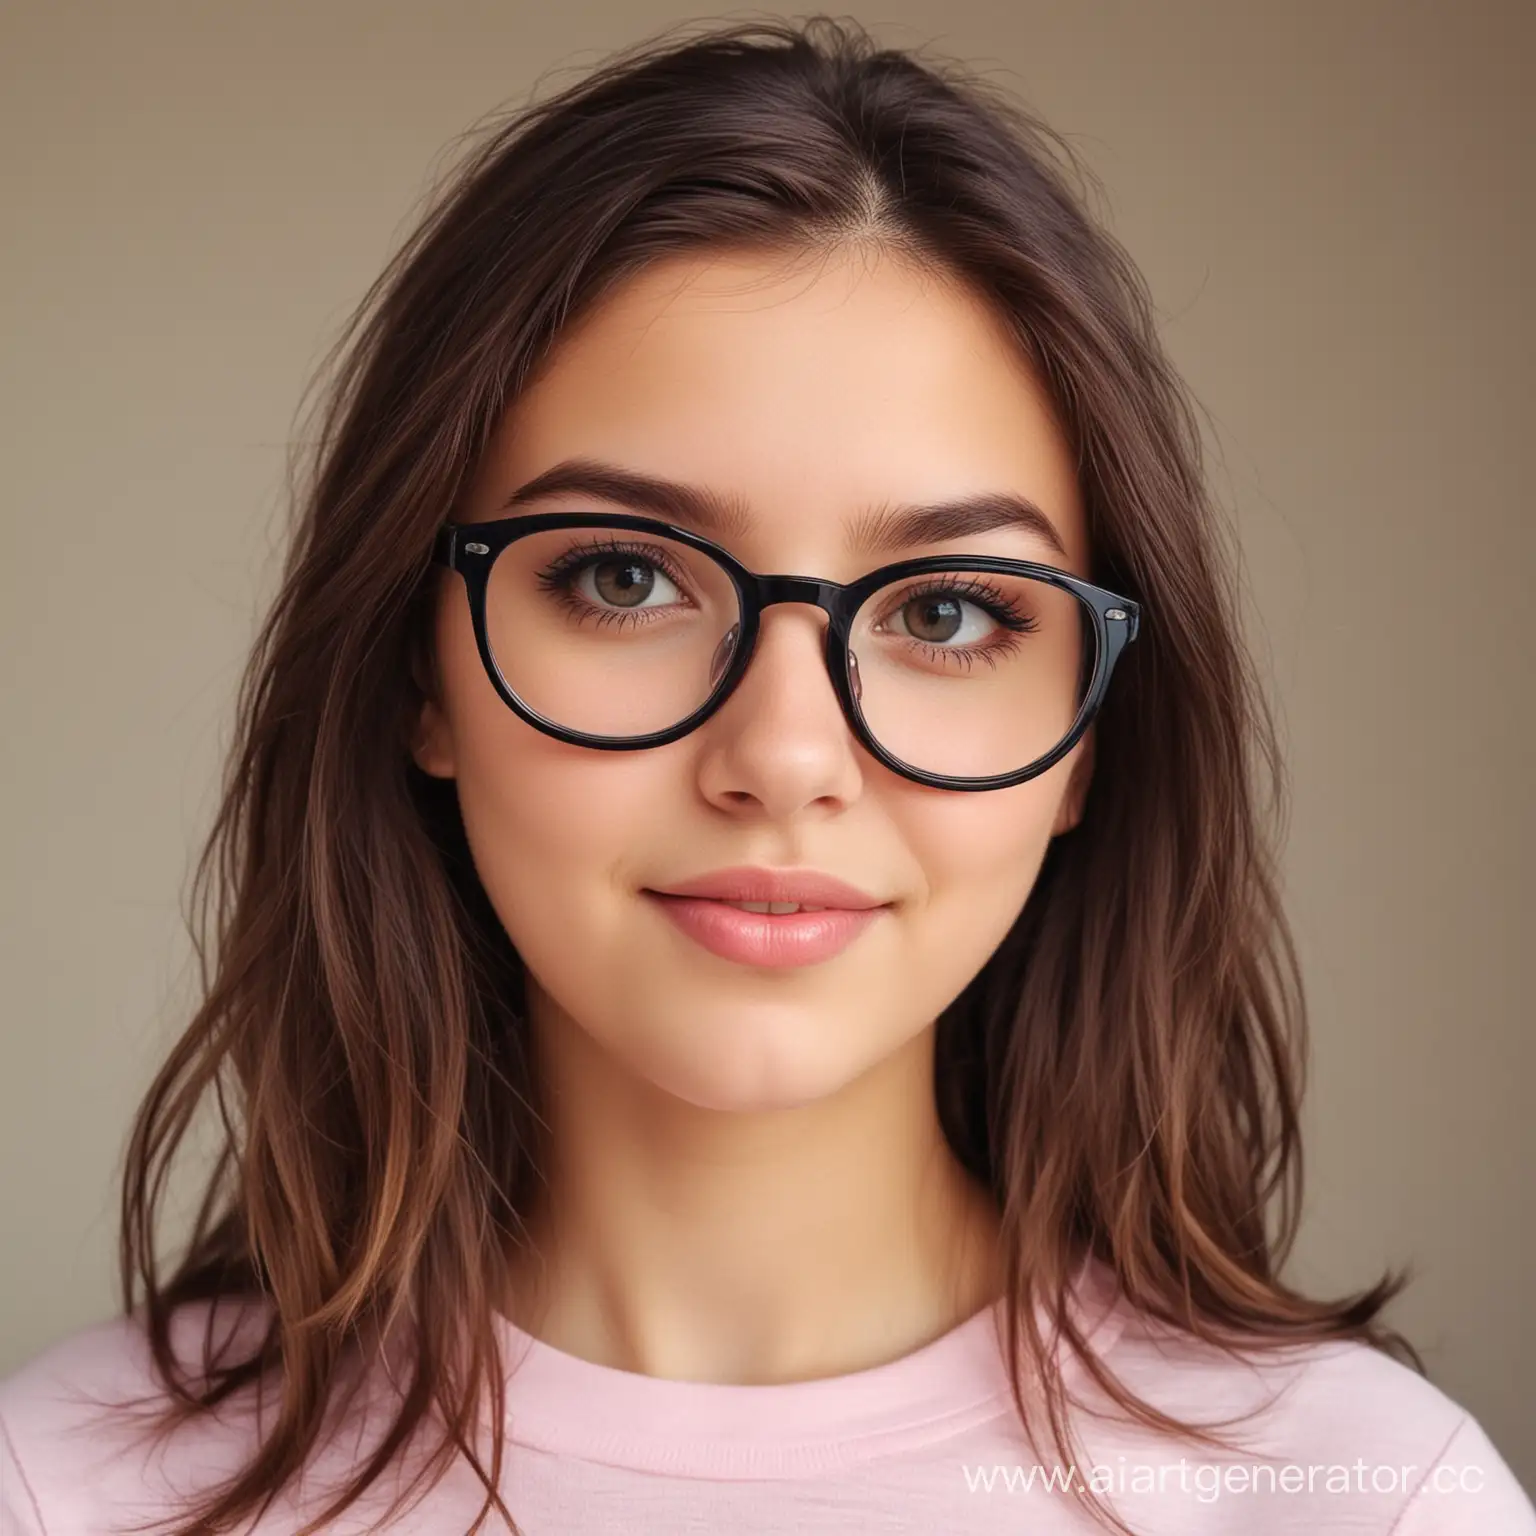 Adorable-Smart-Girl-Wearing-Glasses